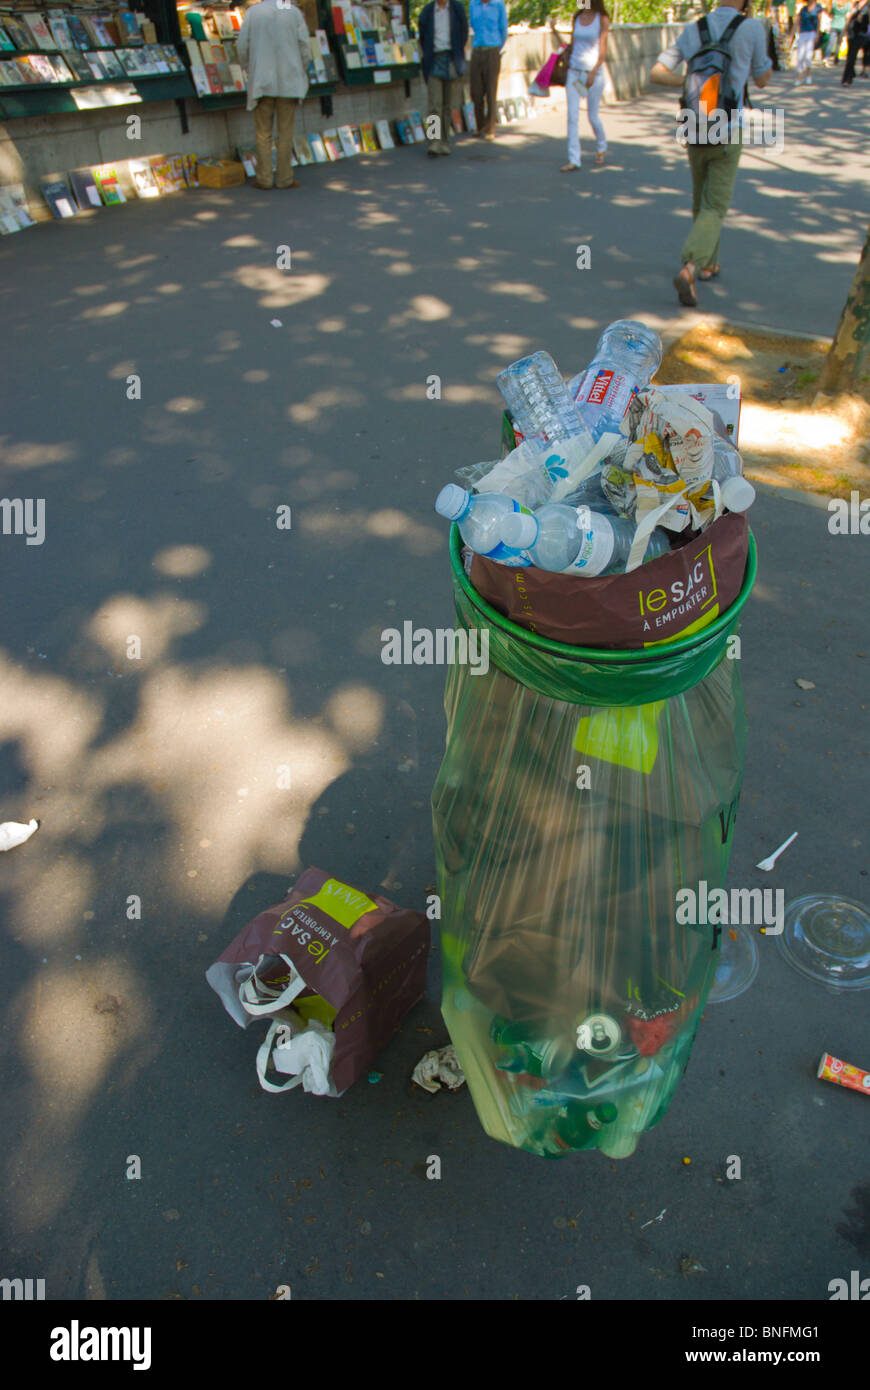 Overflowing bin garbage can St-Germain-des-Pres Paris France Europe Stock Photo